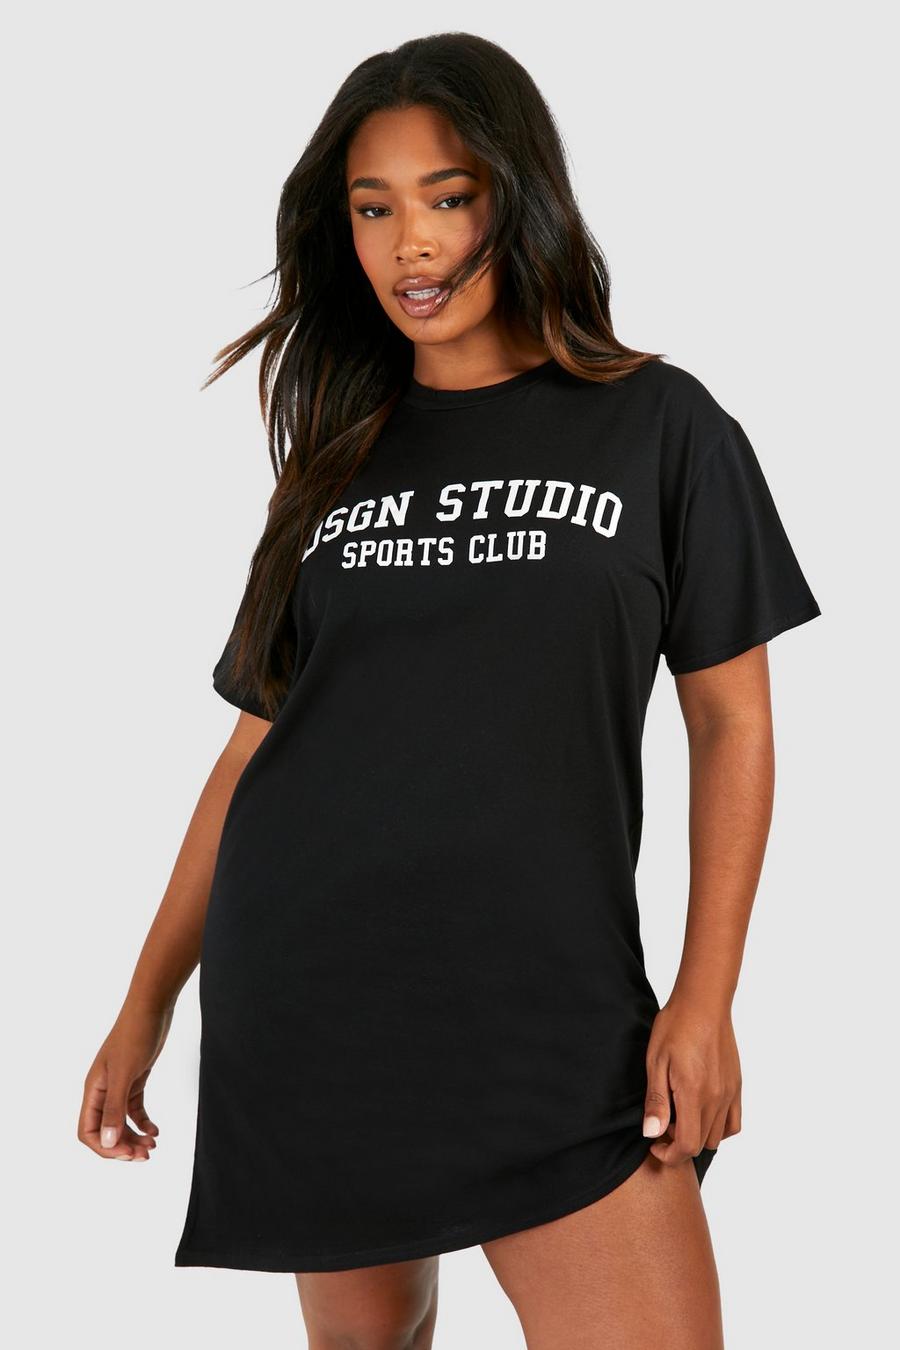 Grande taille - Robe t-shirt à slogan Dsgn Studio, Black